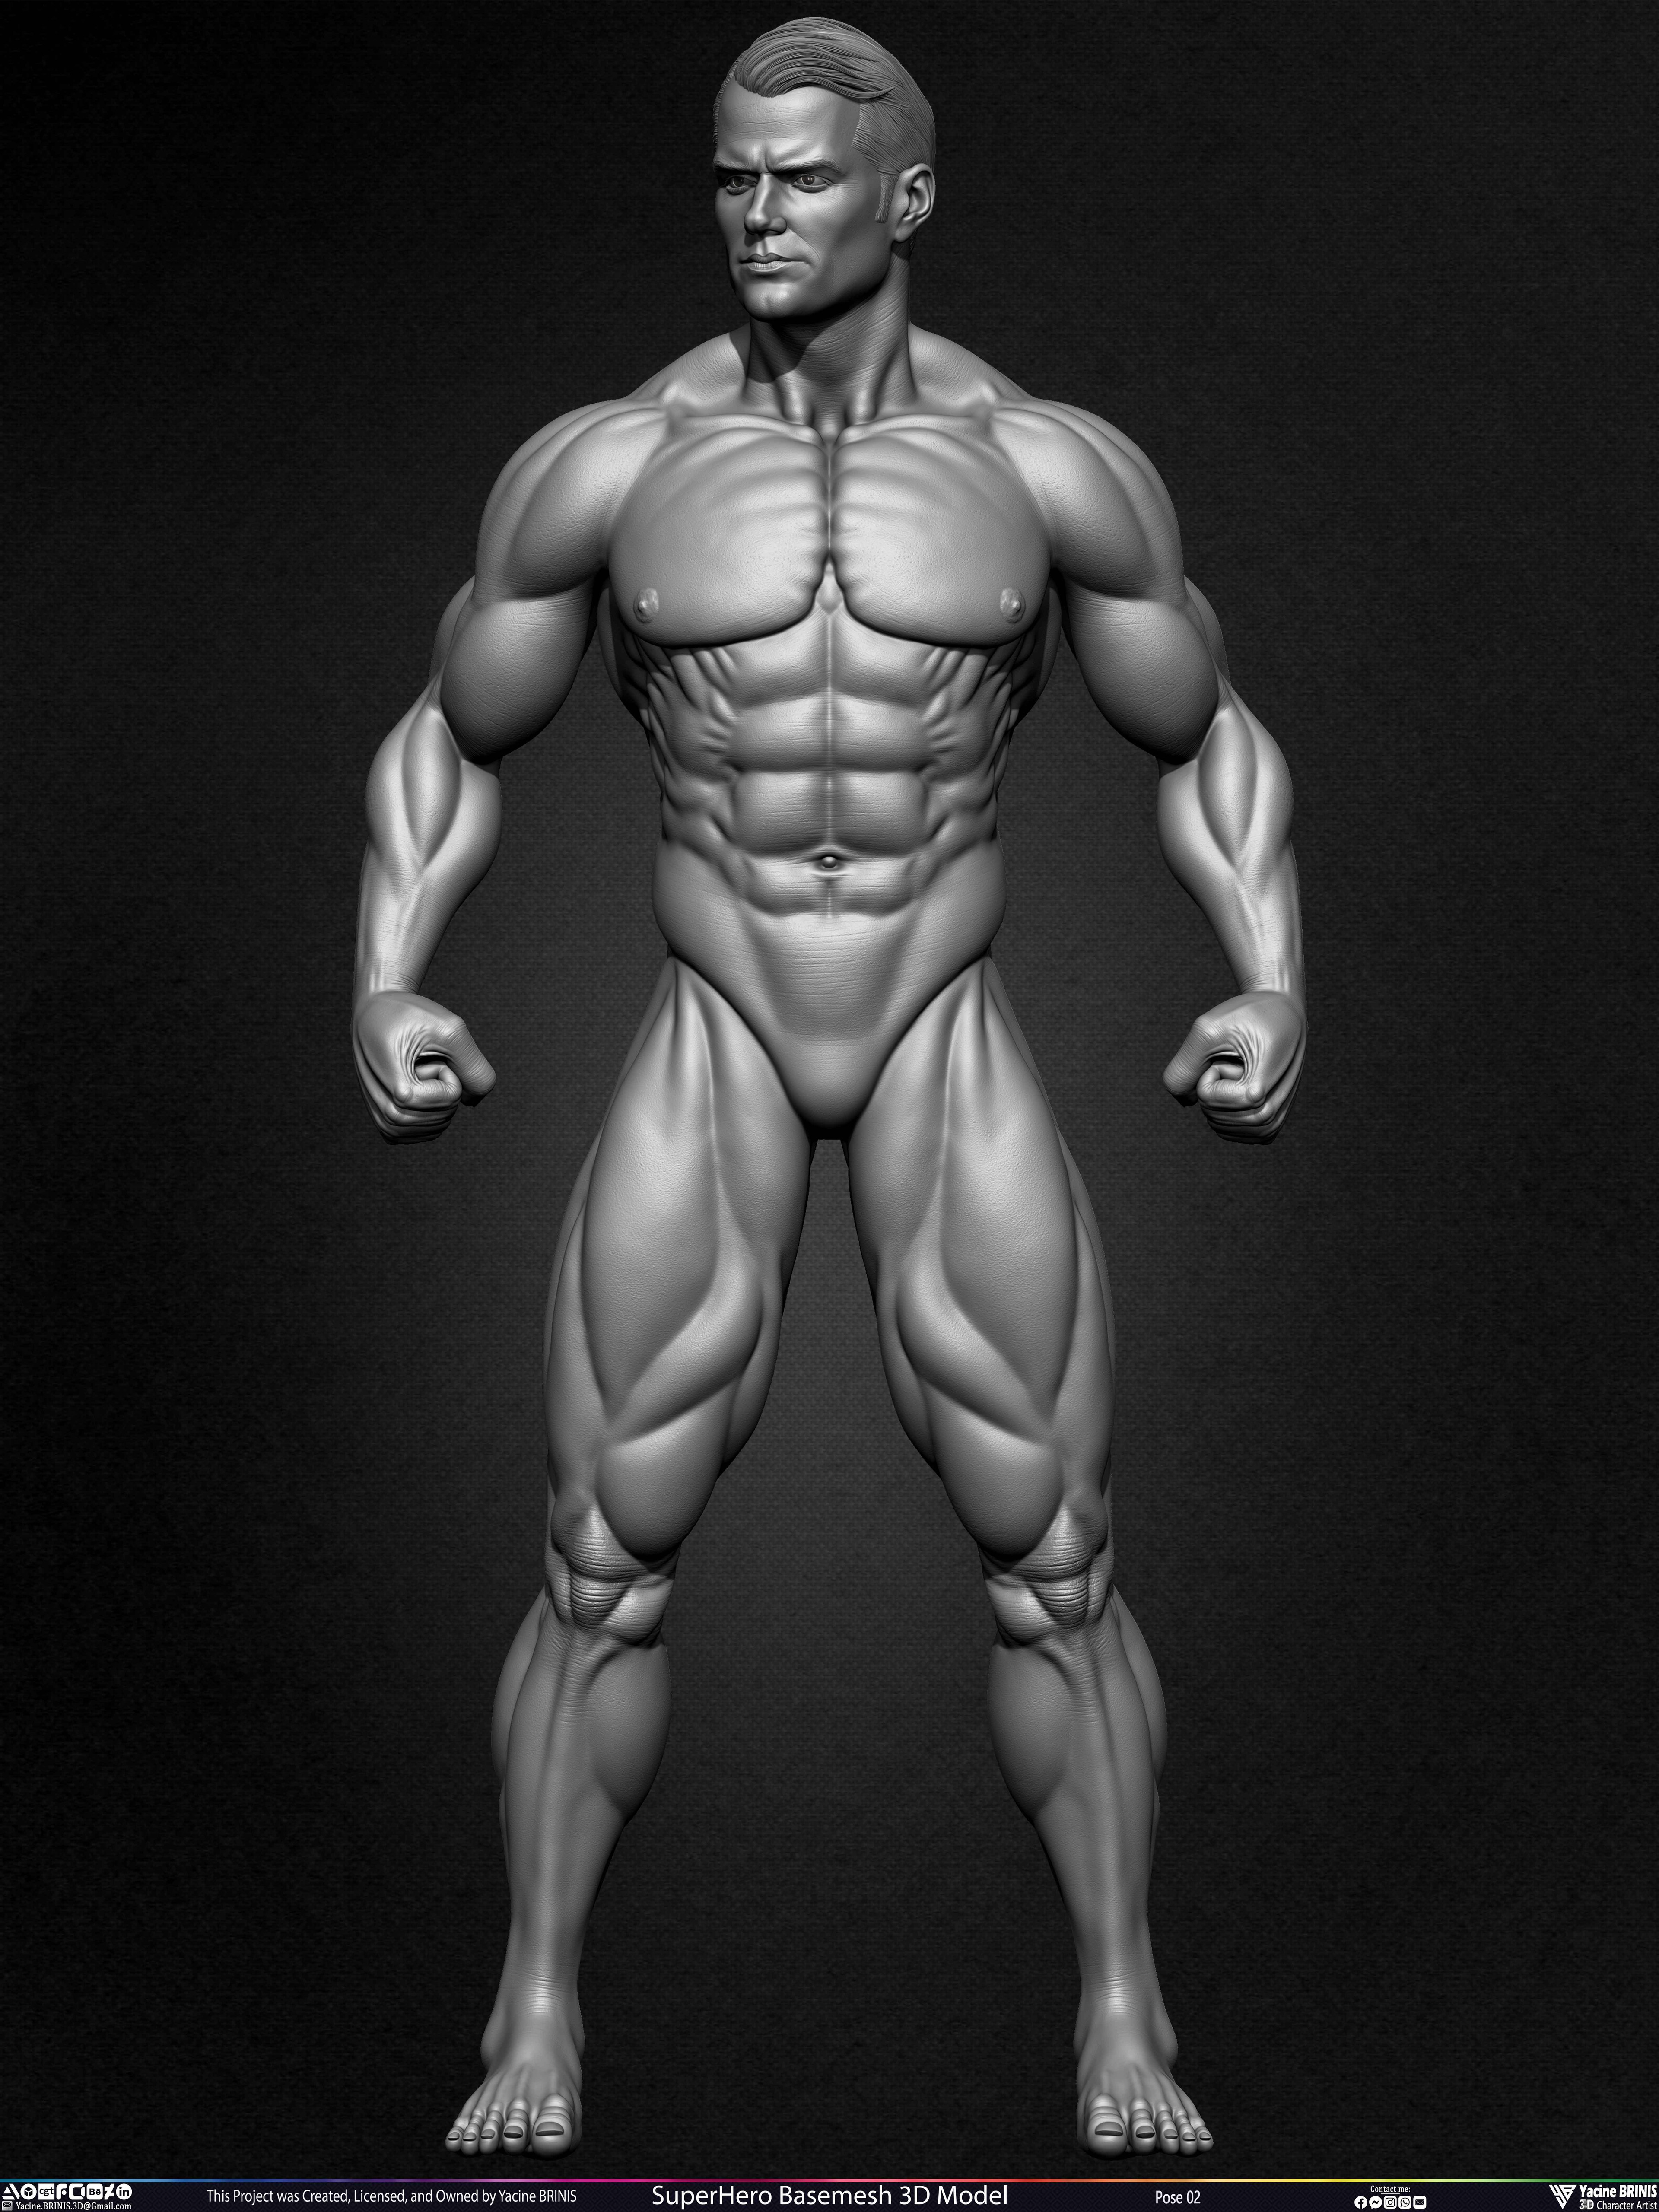 Super-Hero Basemesh 3D Model - Henry Cavill- Man of Steel - Superman - Pose 02 Sculpted by Yacine BRINIS Set 001